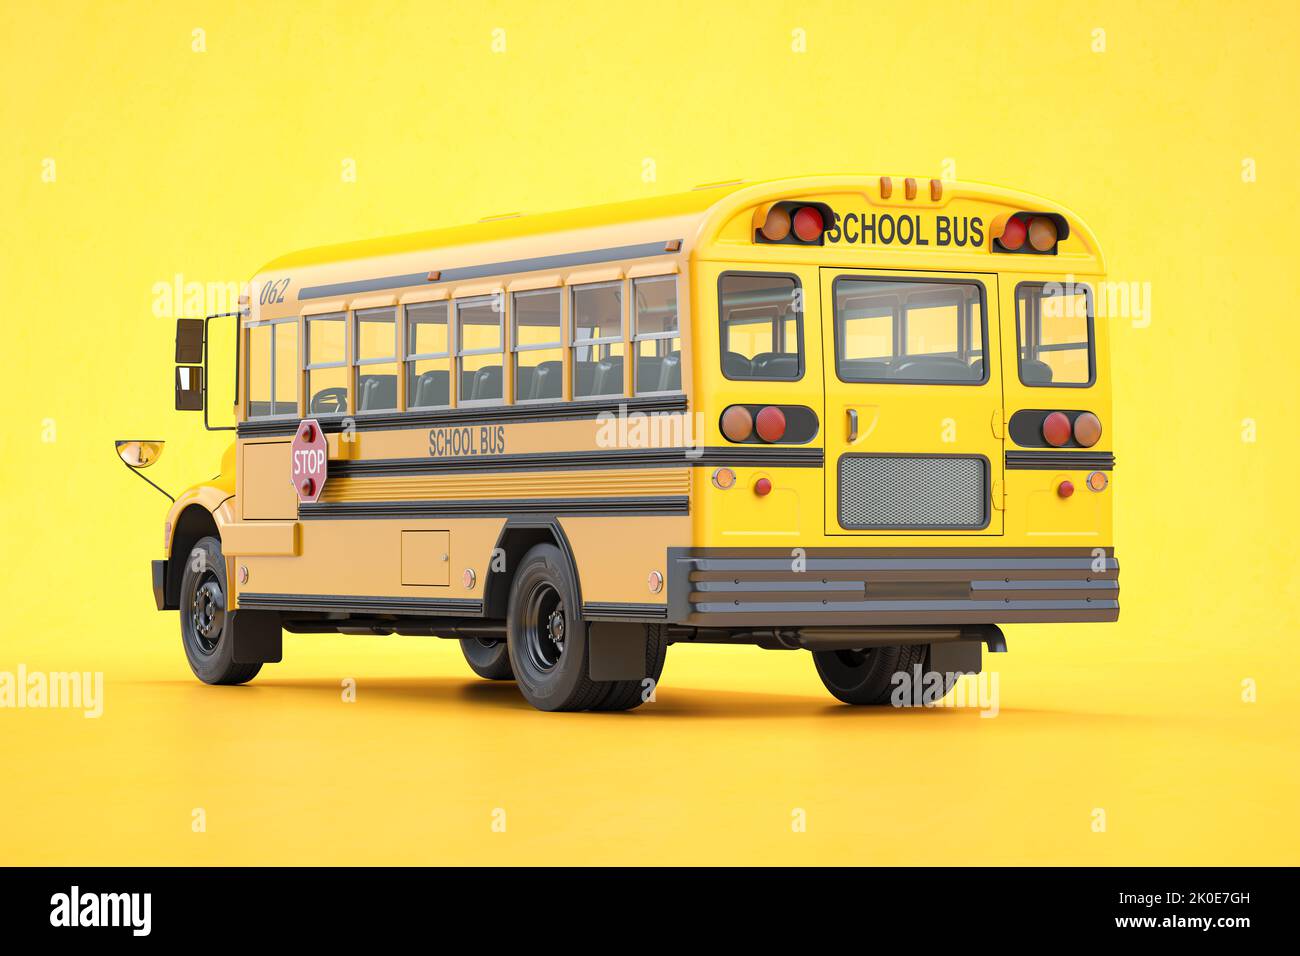 School bus on yellow background. 3d illustration Stock Photo